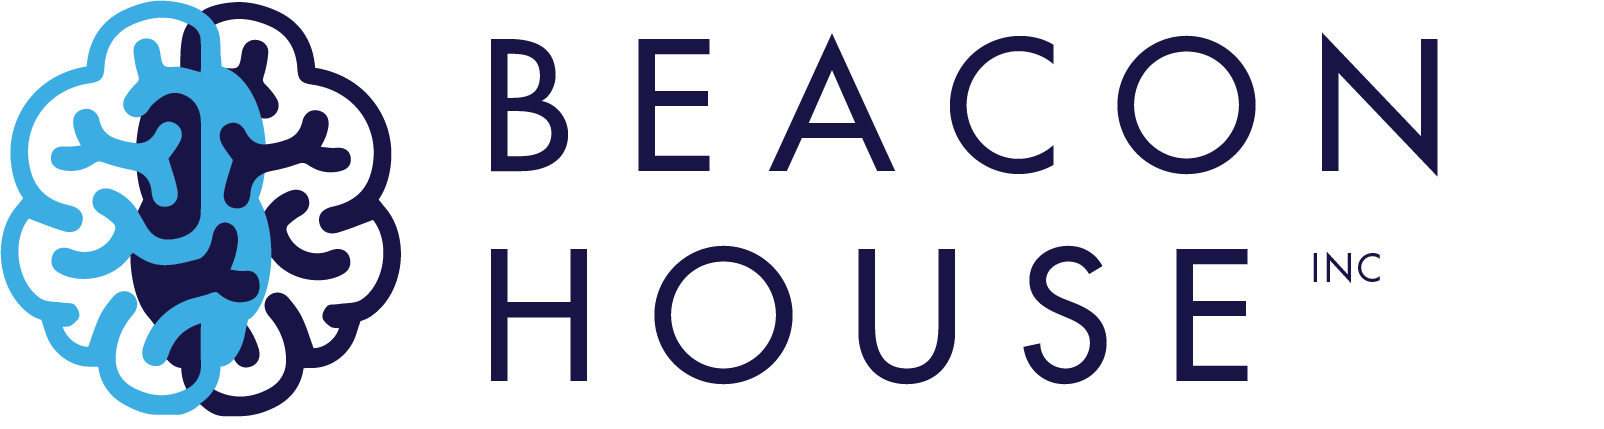 Beaconhouse Logo - The Beacon House. STEAM Education for Everyone